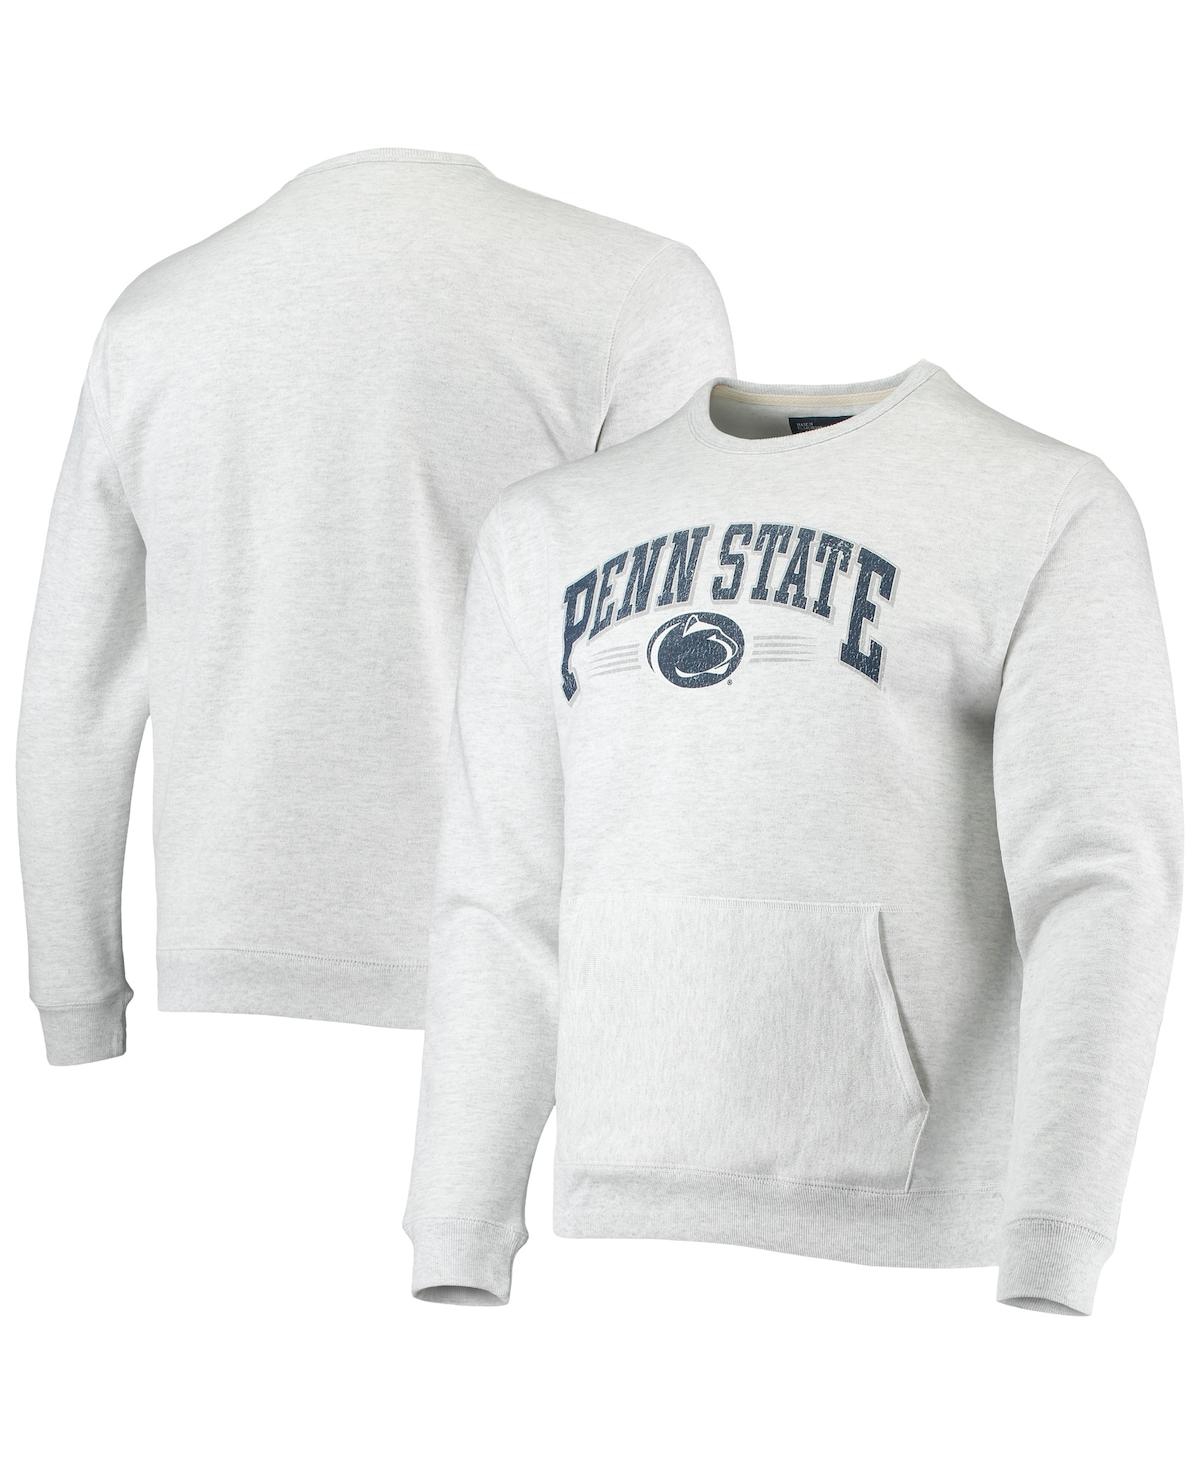 Men's League Collegiate Wear Heather Gray Penn State Nittany Lions Upperclassman Pocket Pullover Sweatshirt - Heathered Gray